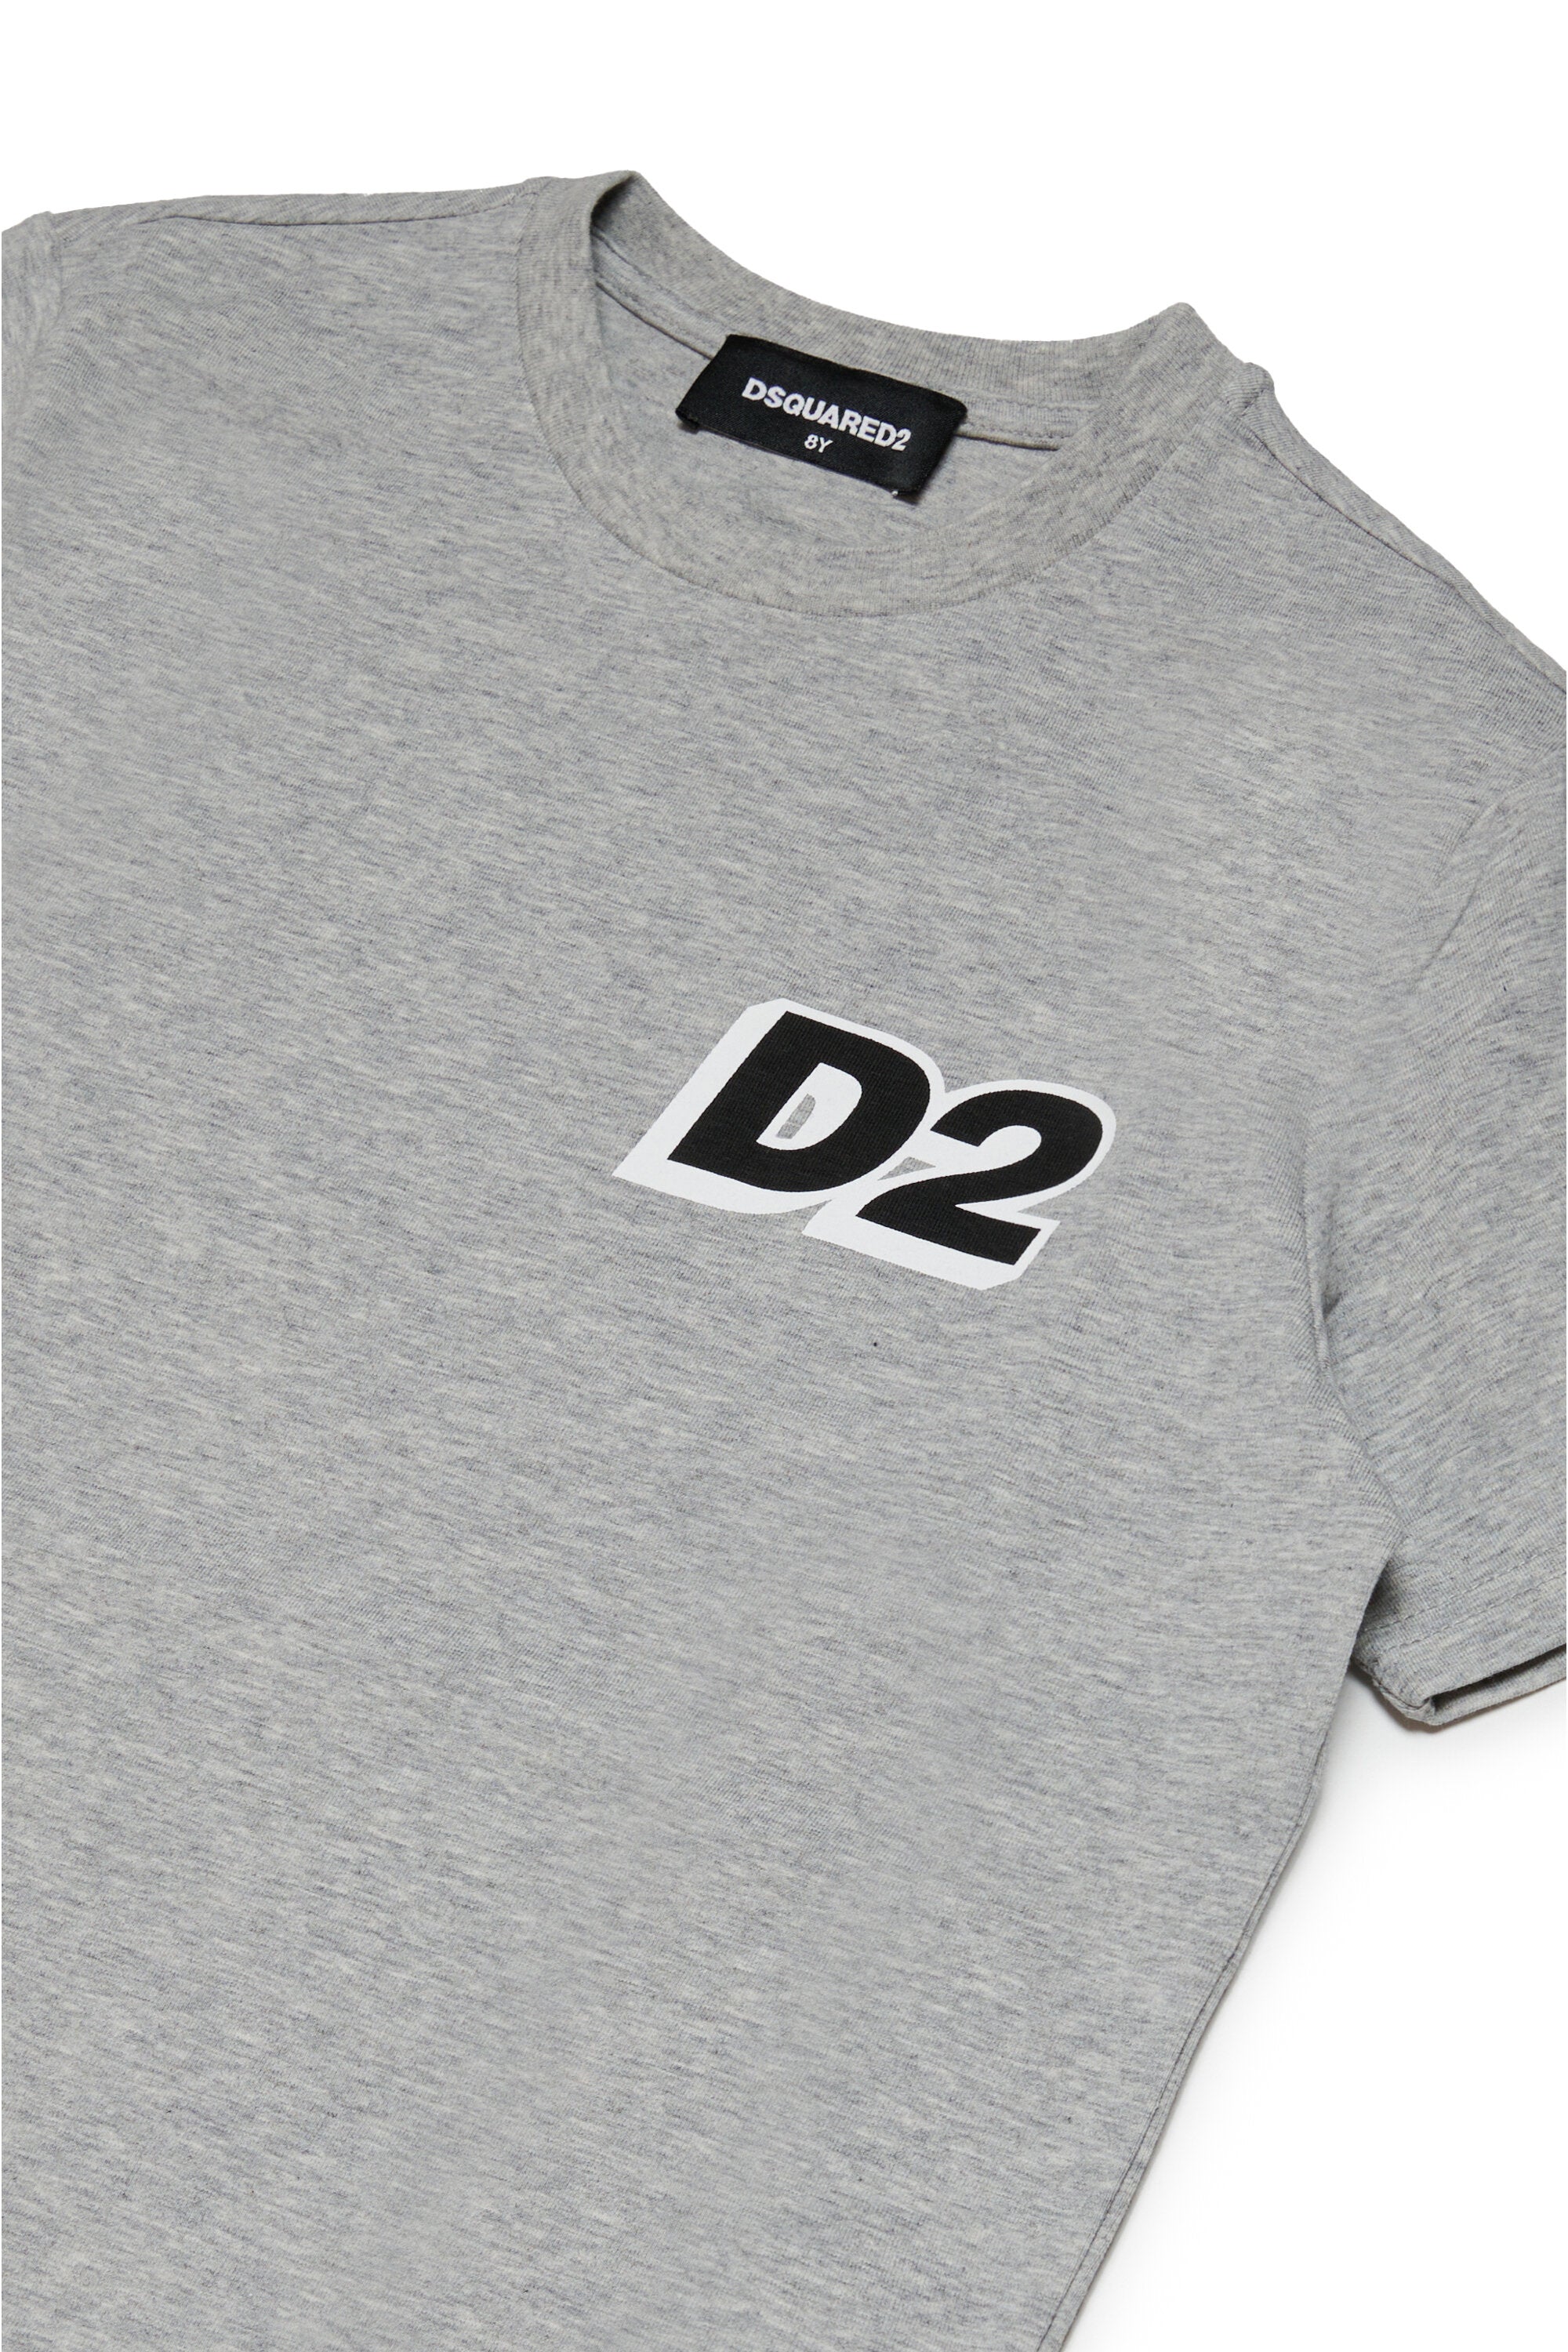 Mélange jersey loungewear t-shirt with D2 logo